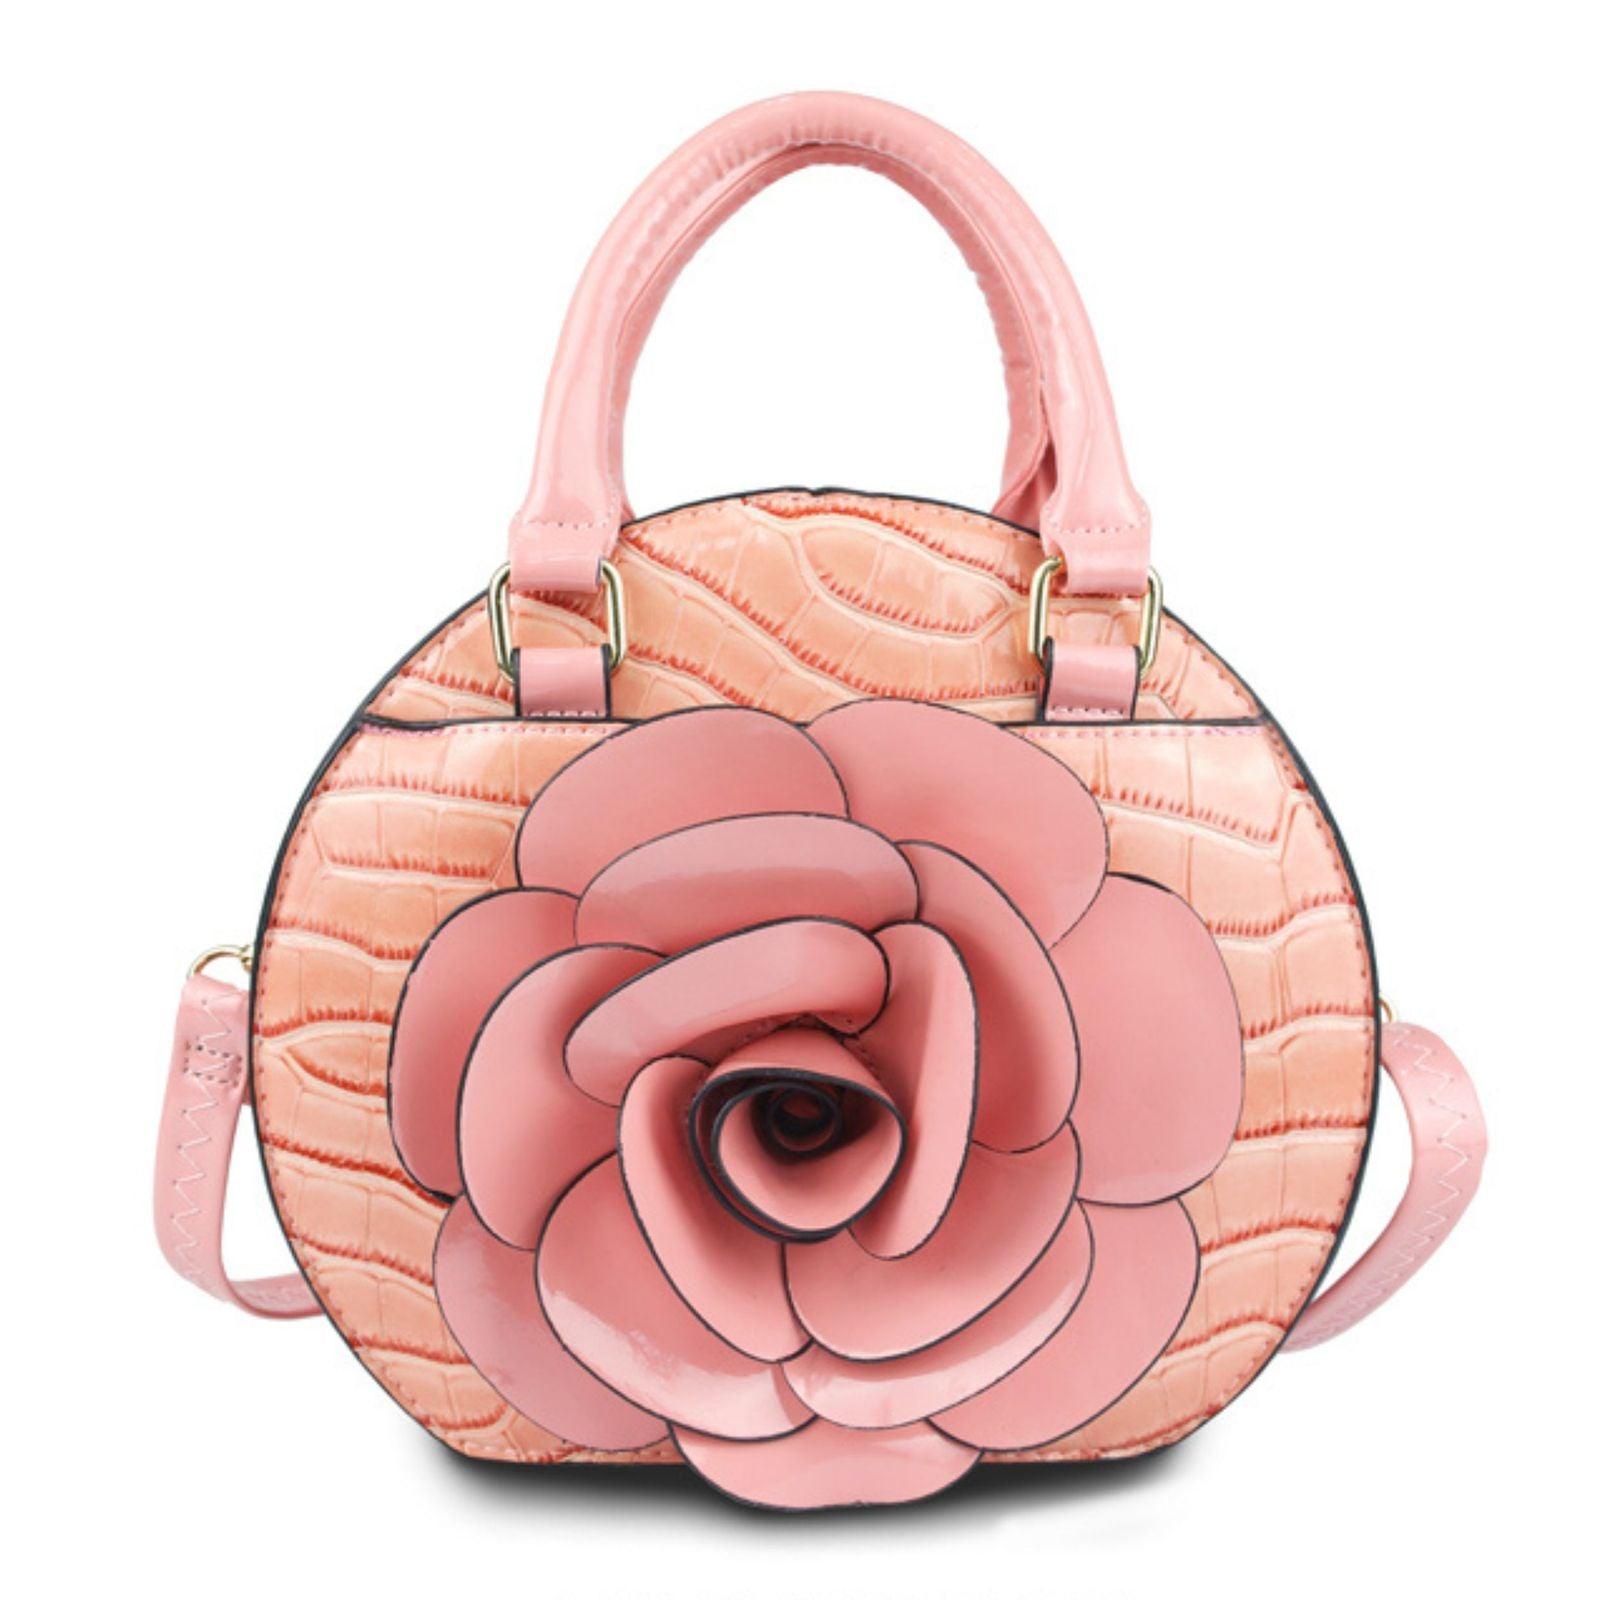 Stylish Pink Dimensional Flower Handbag with Top Handles